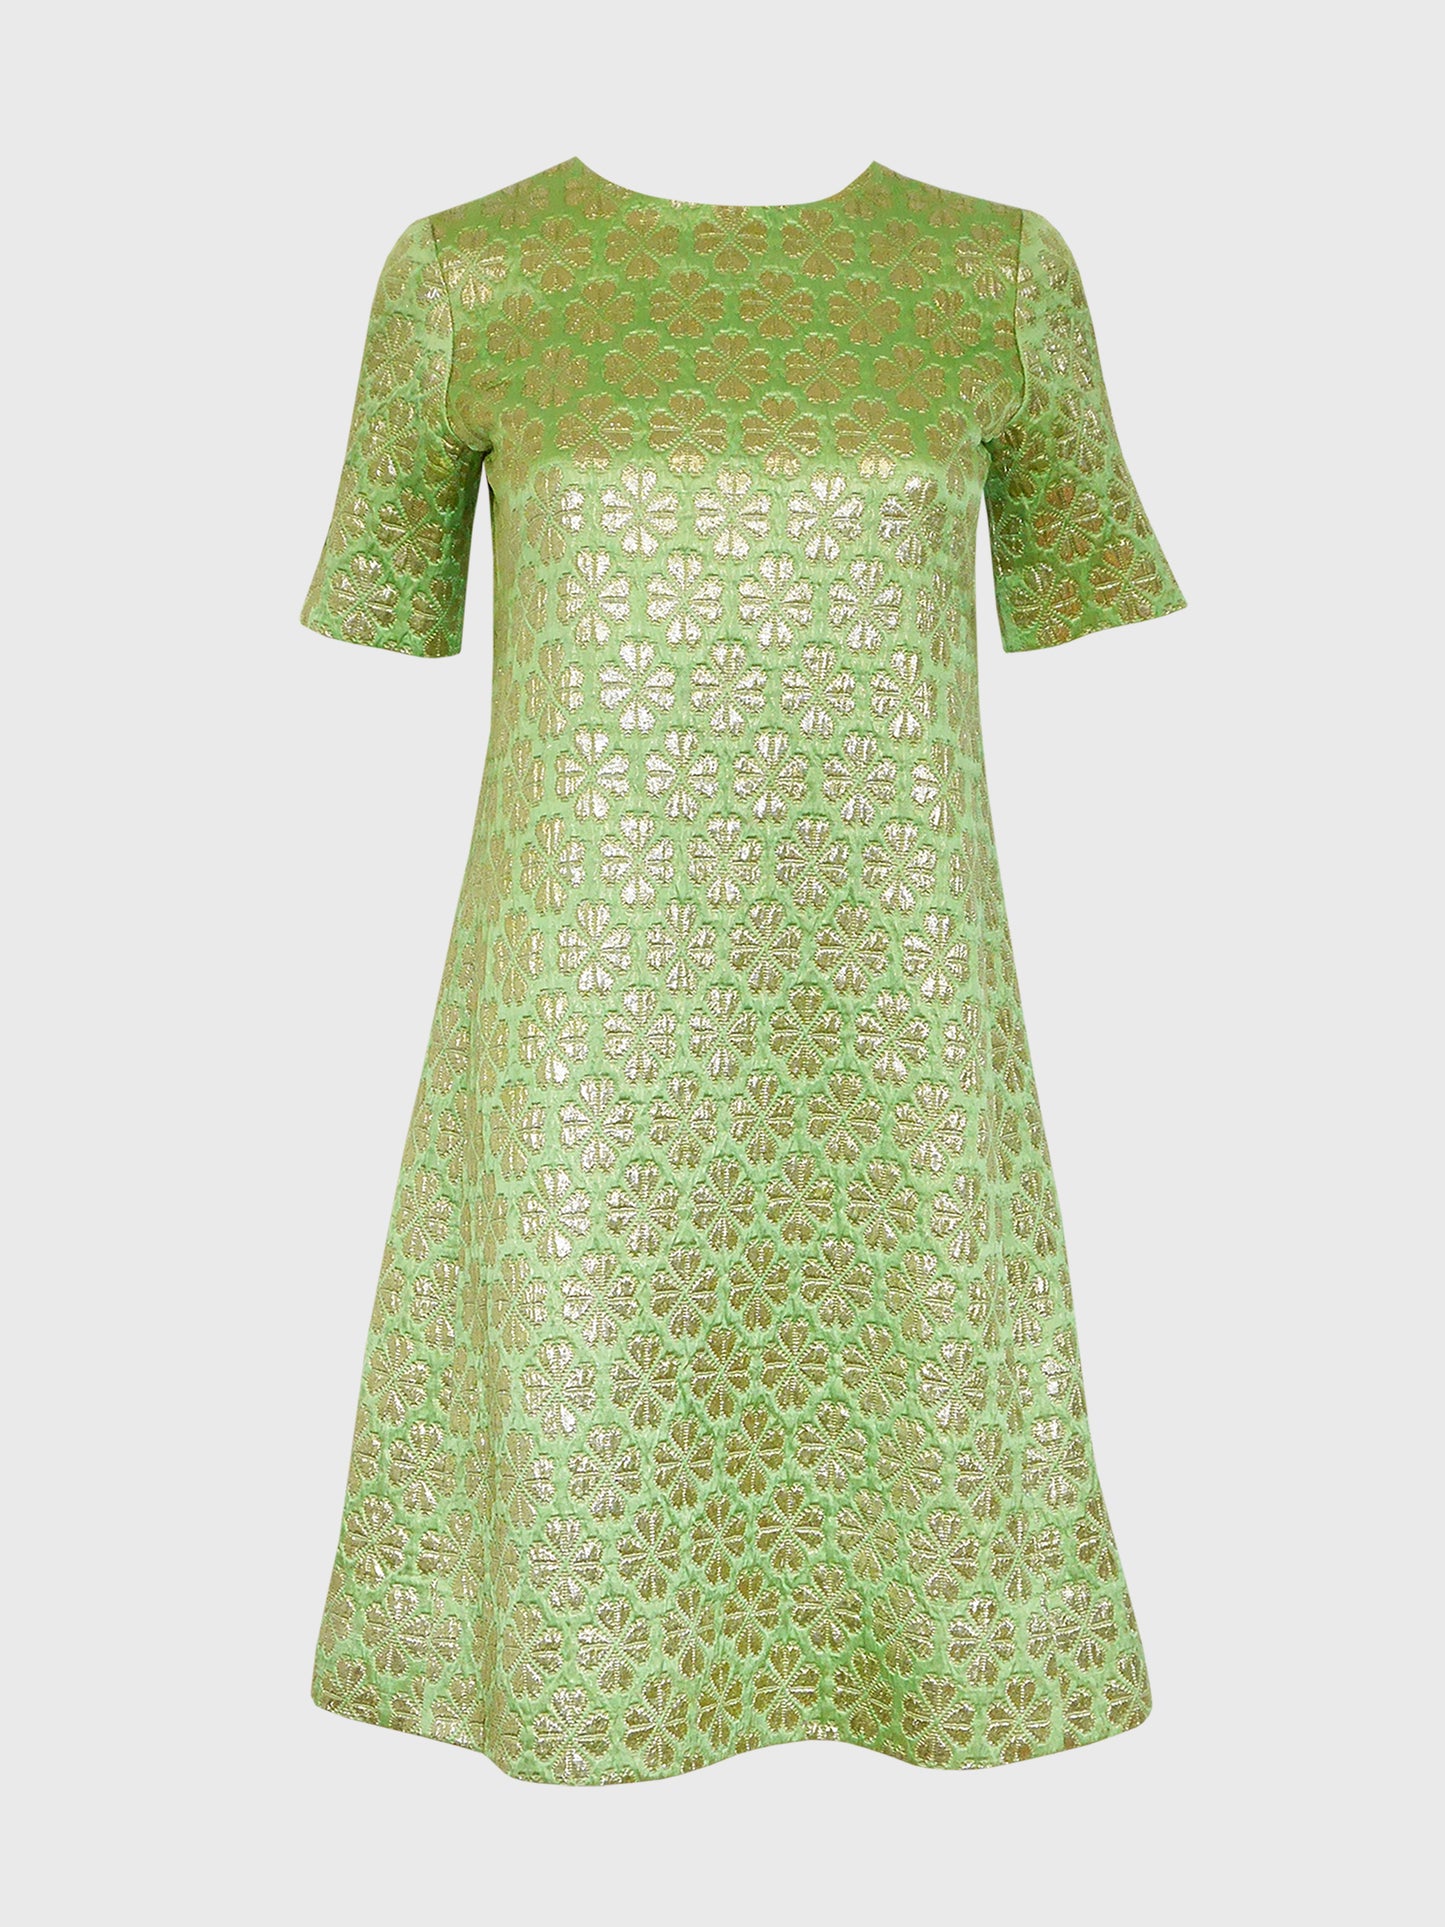 YVES SAINT LAURENT c. Fall 1967 Vintage Documented Brocade Dress